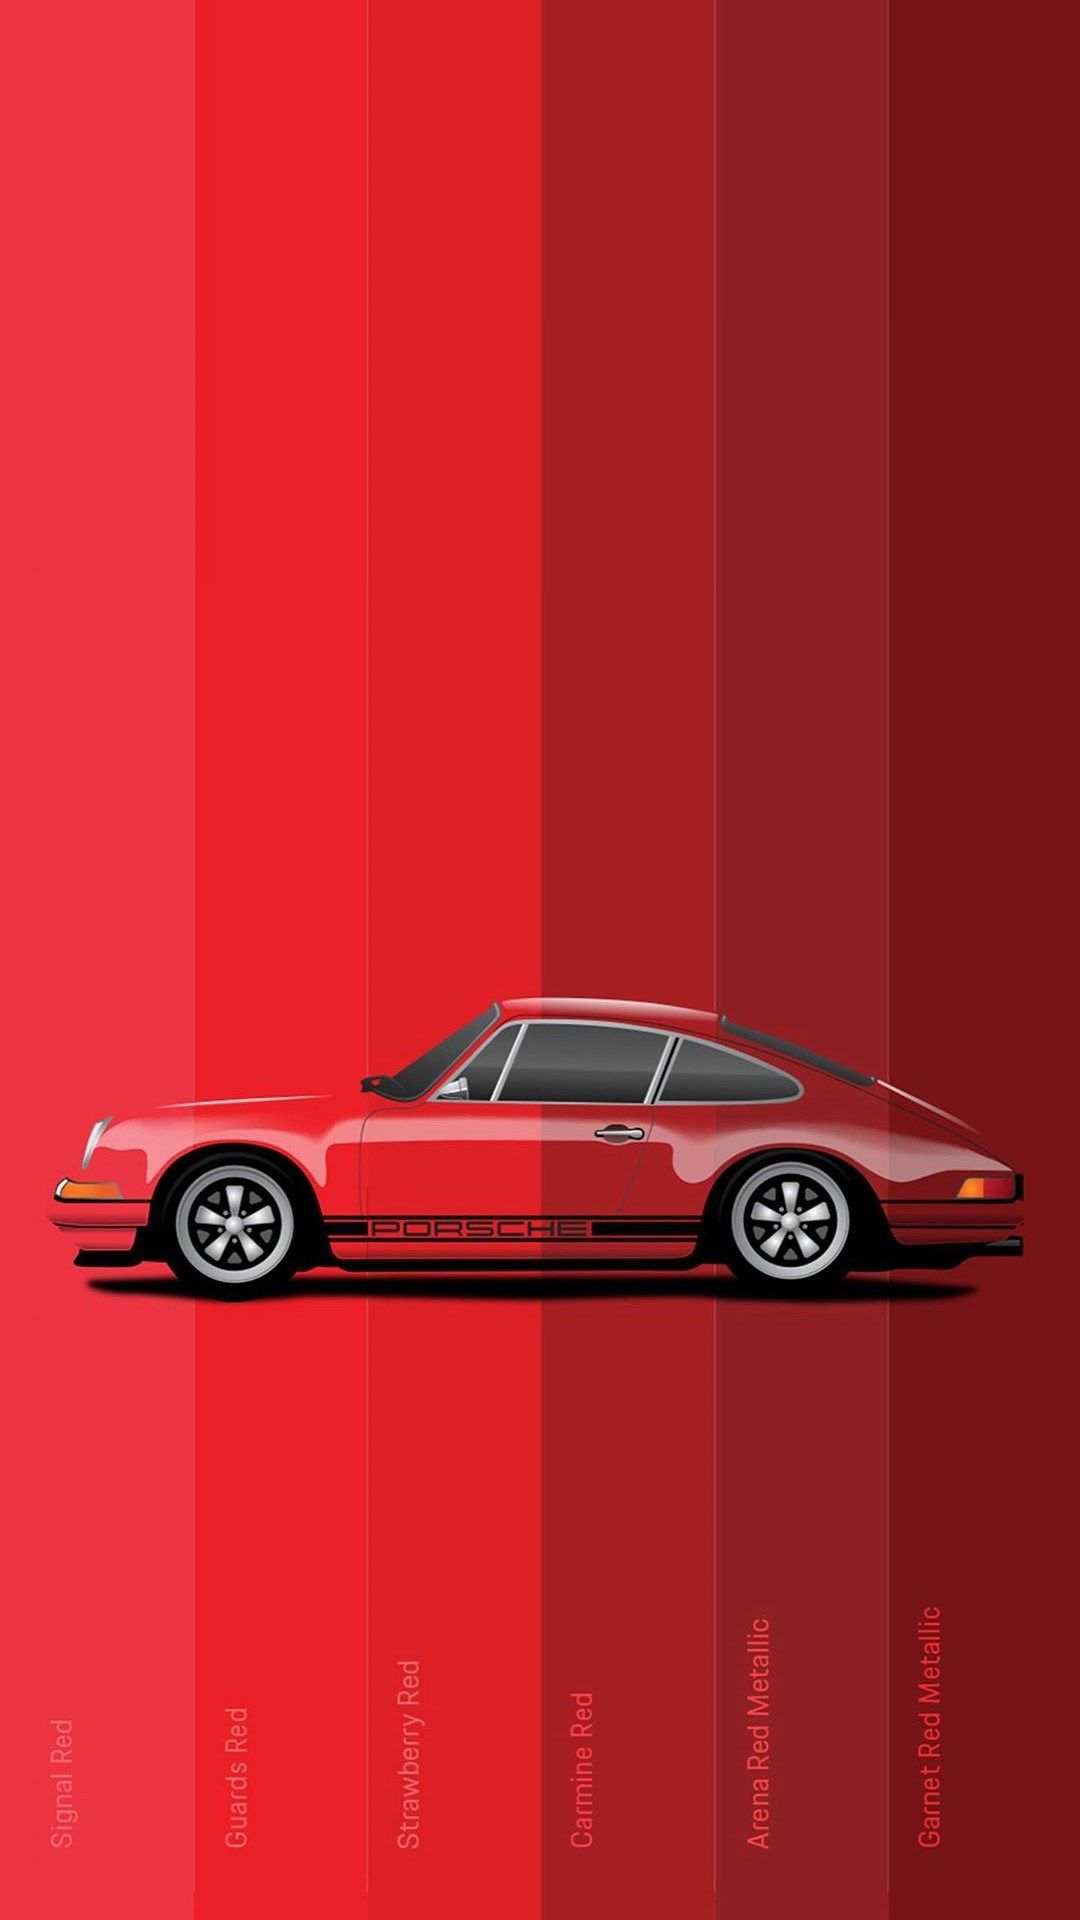 Porsche 911 Minimal Wallpapers